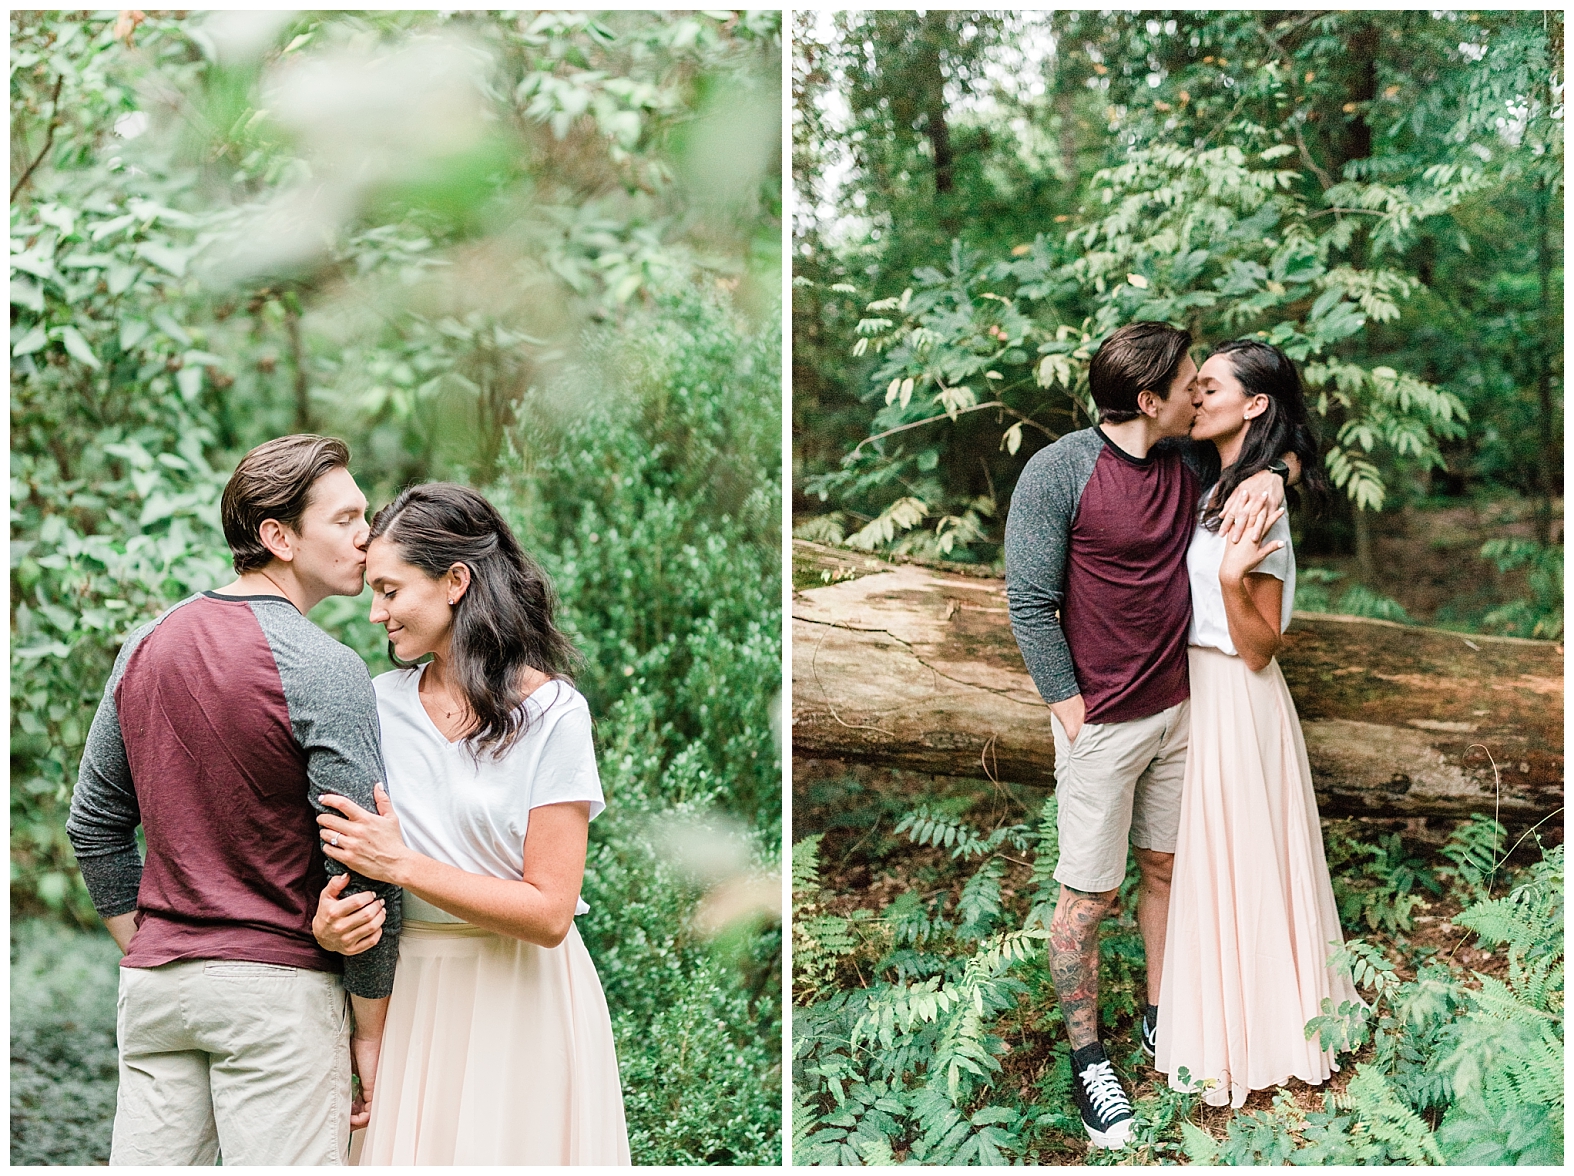 Adventure, Engagement Session, Garden, NJ Wedding Photographer, Outdoor, Sayen Gardens, Woods, Forest